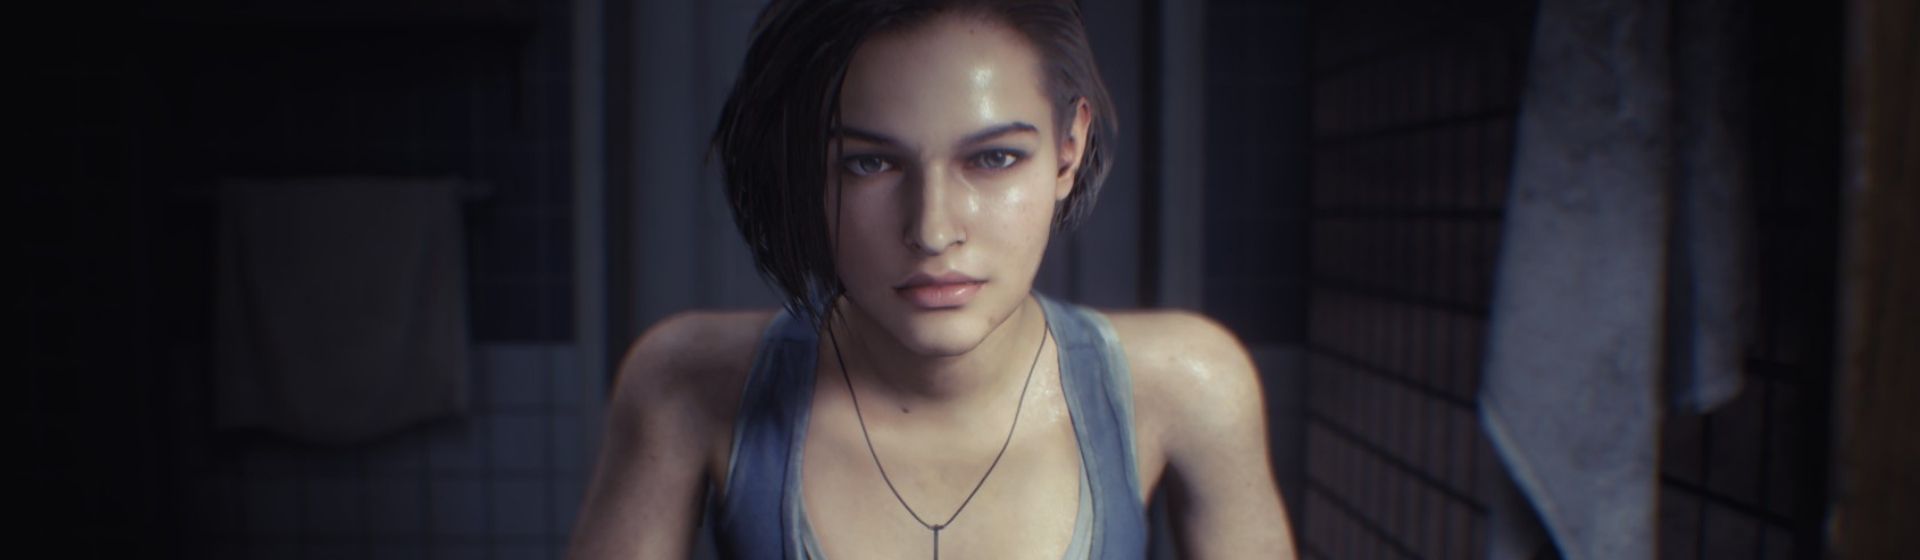 Capa do post: Jill Valentine (Resident Evil): a agente durona da franquia de terror